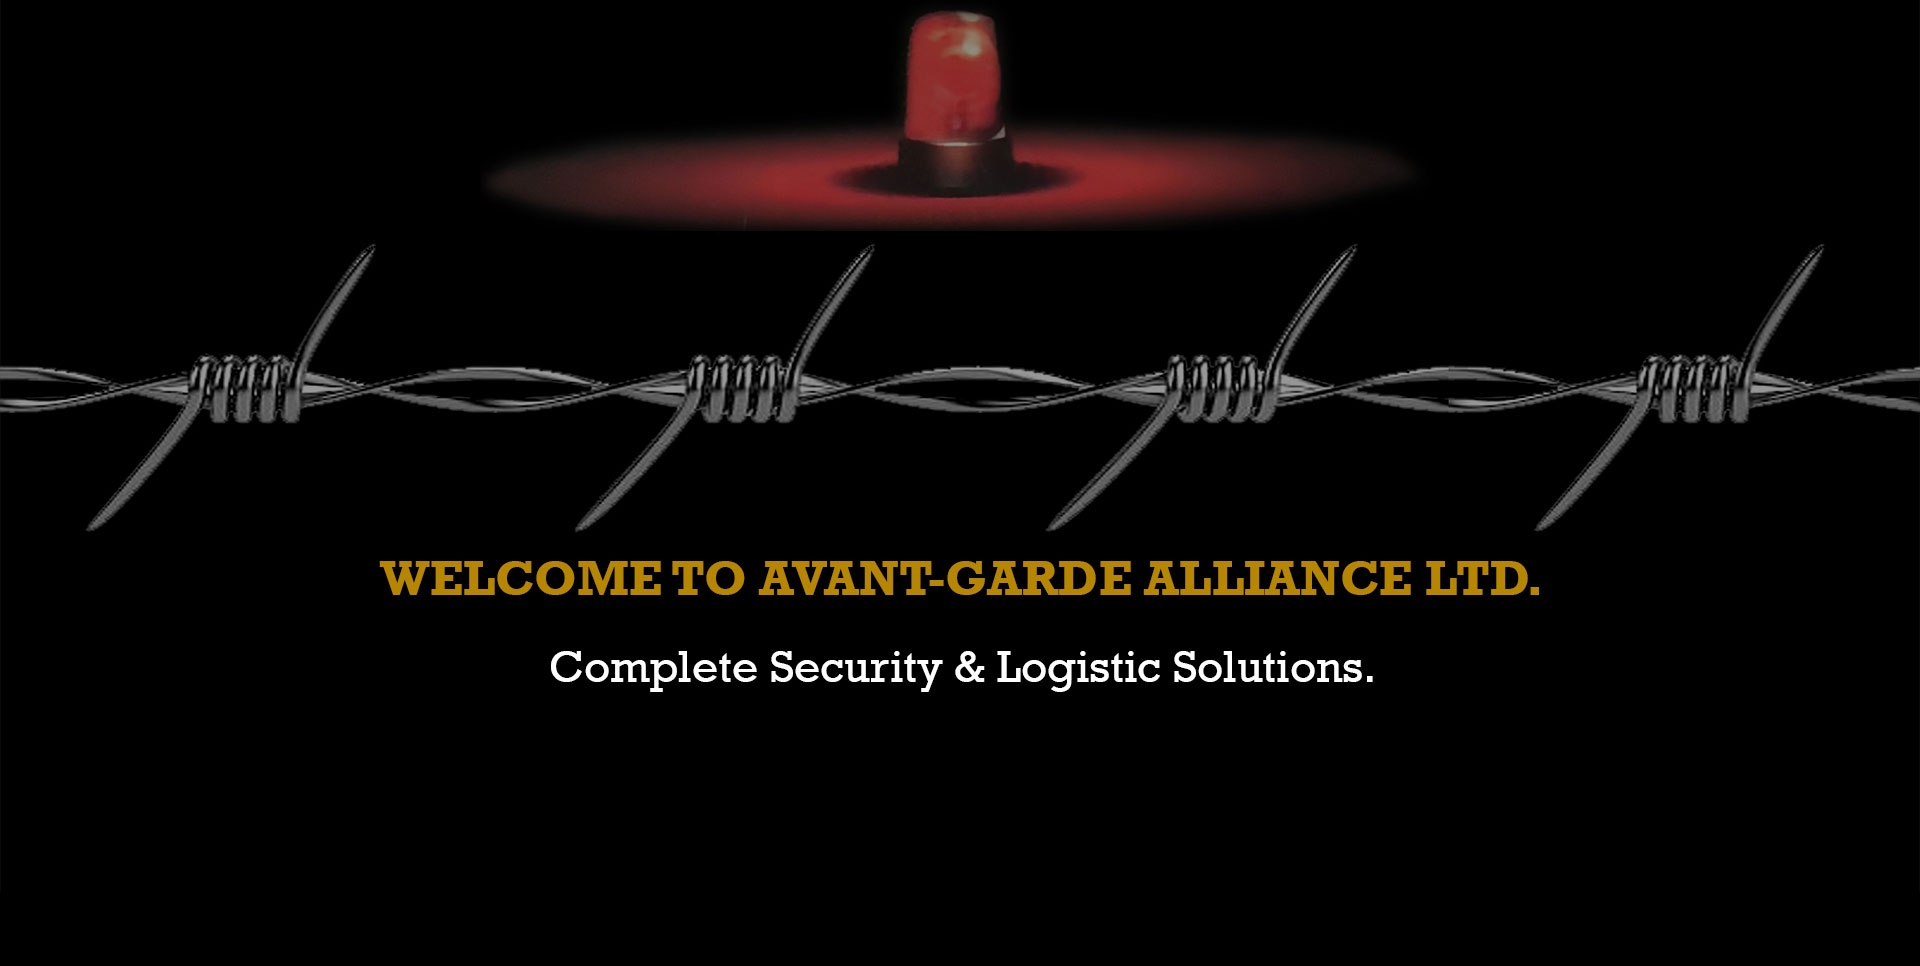 Avant garde Alliance Ltd